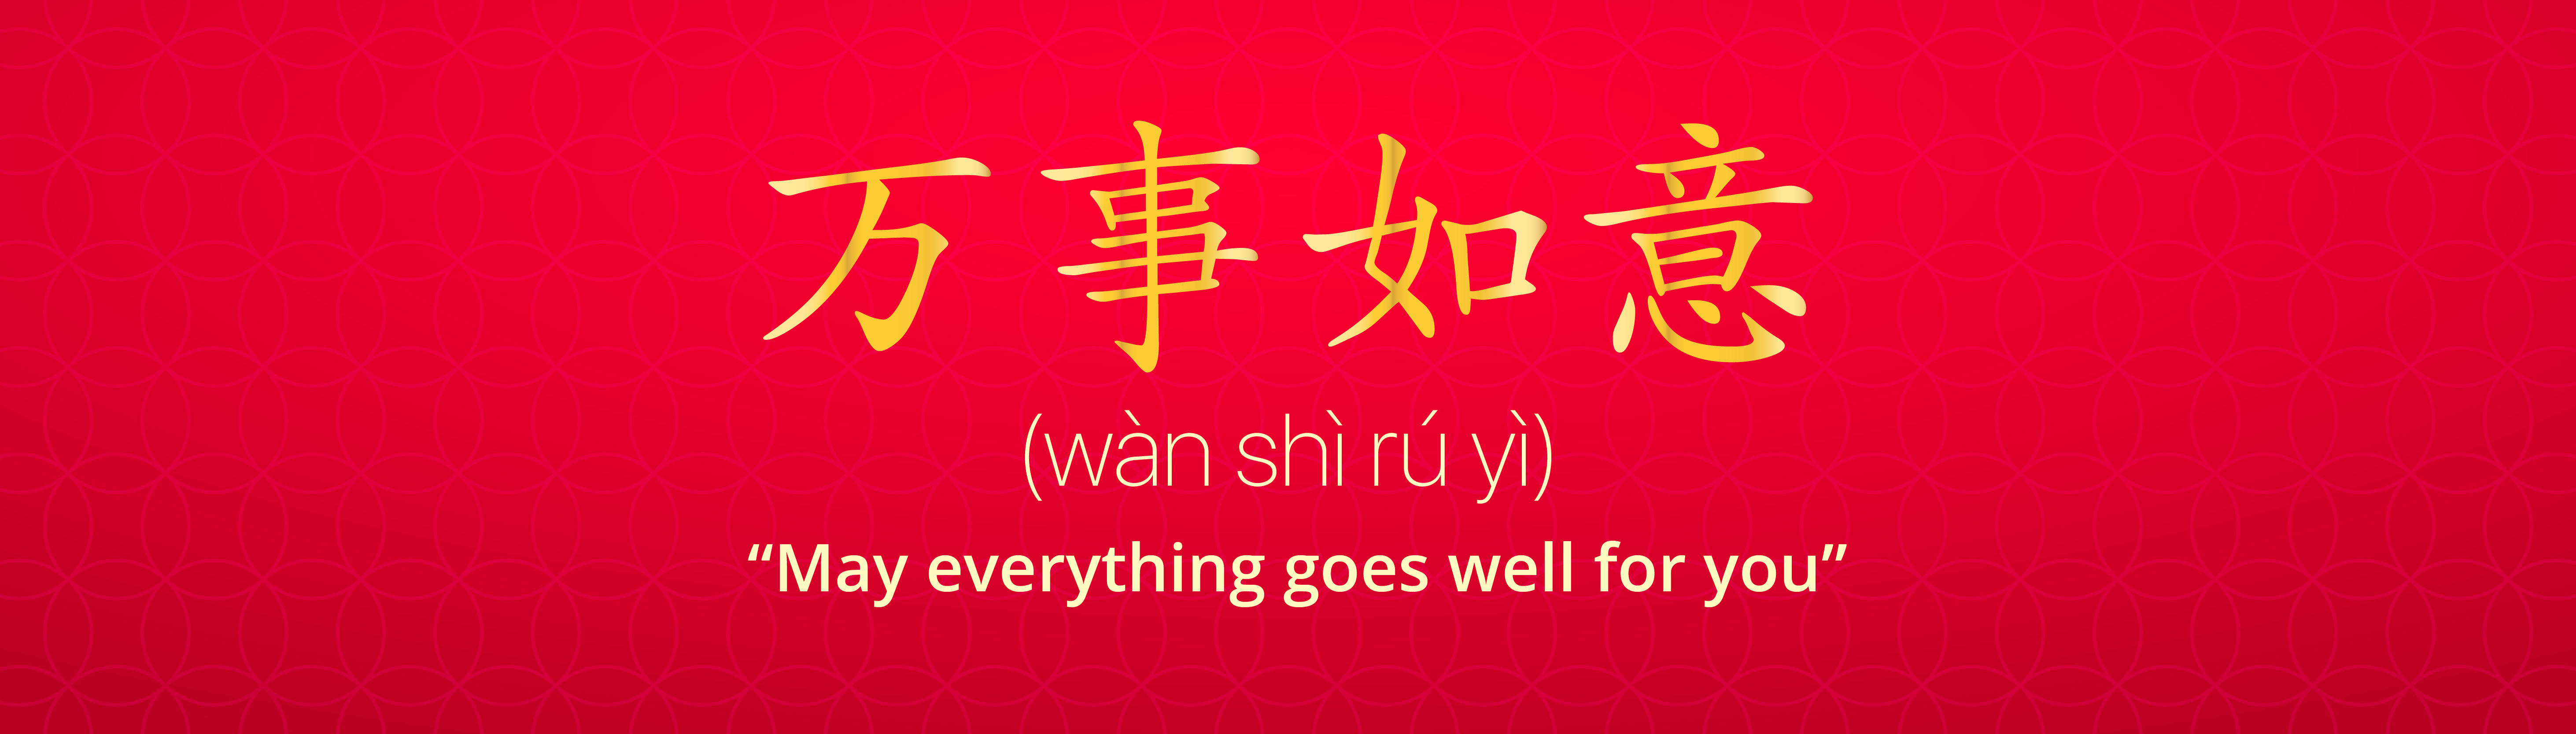 Wan Shi Ru Yi (万事如意): “May everything goes well for you”